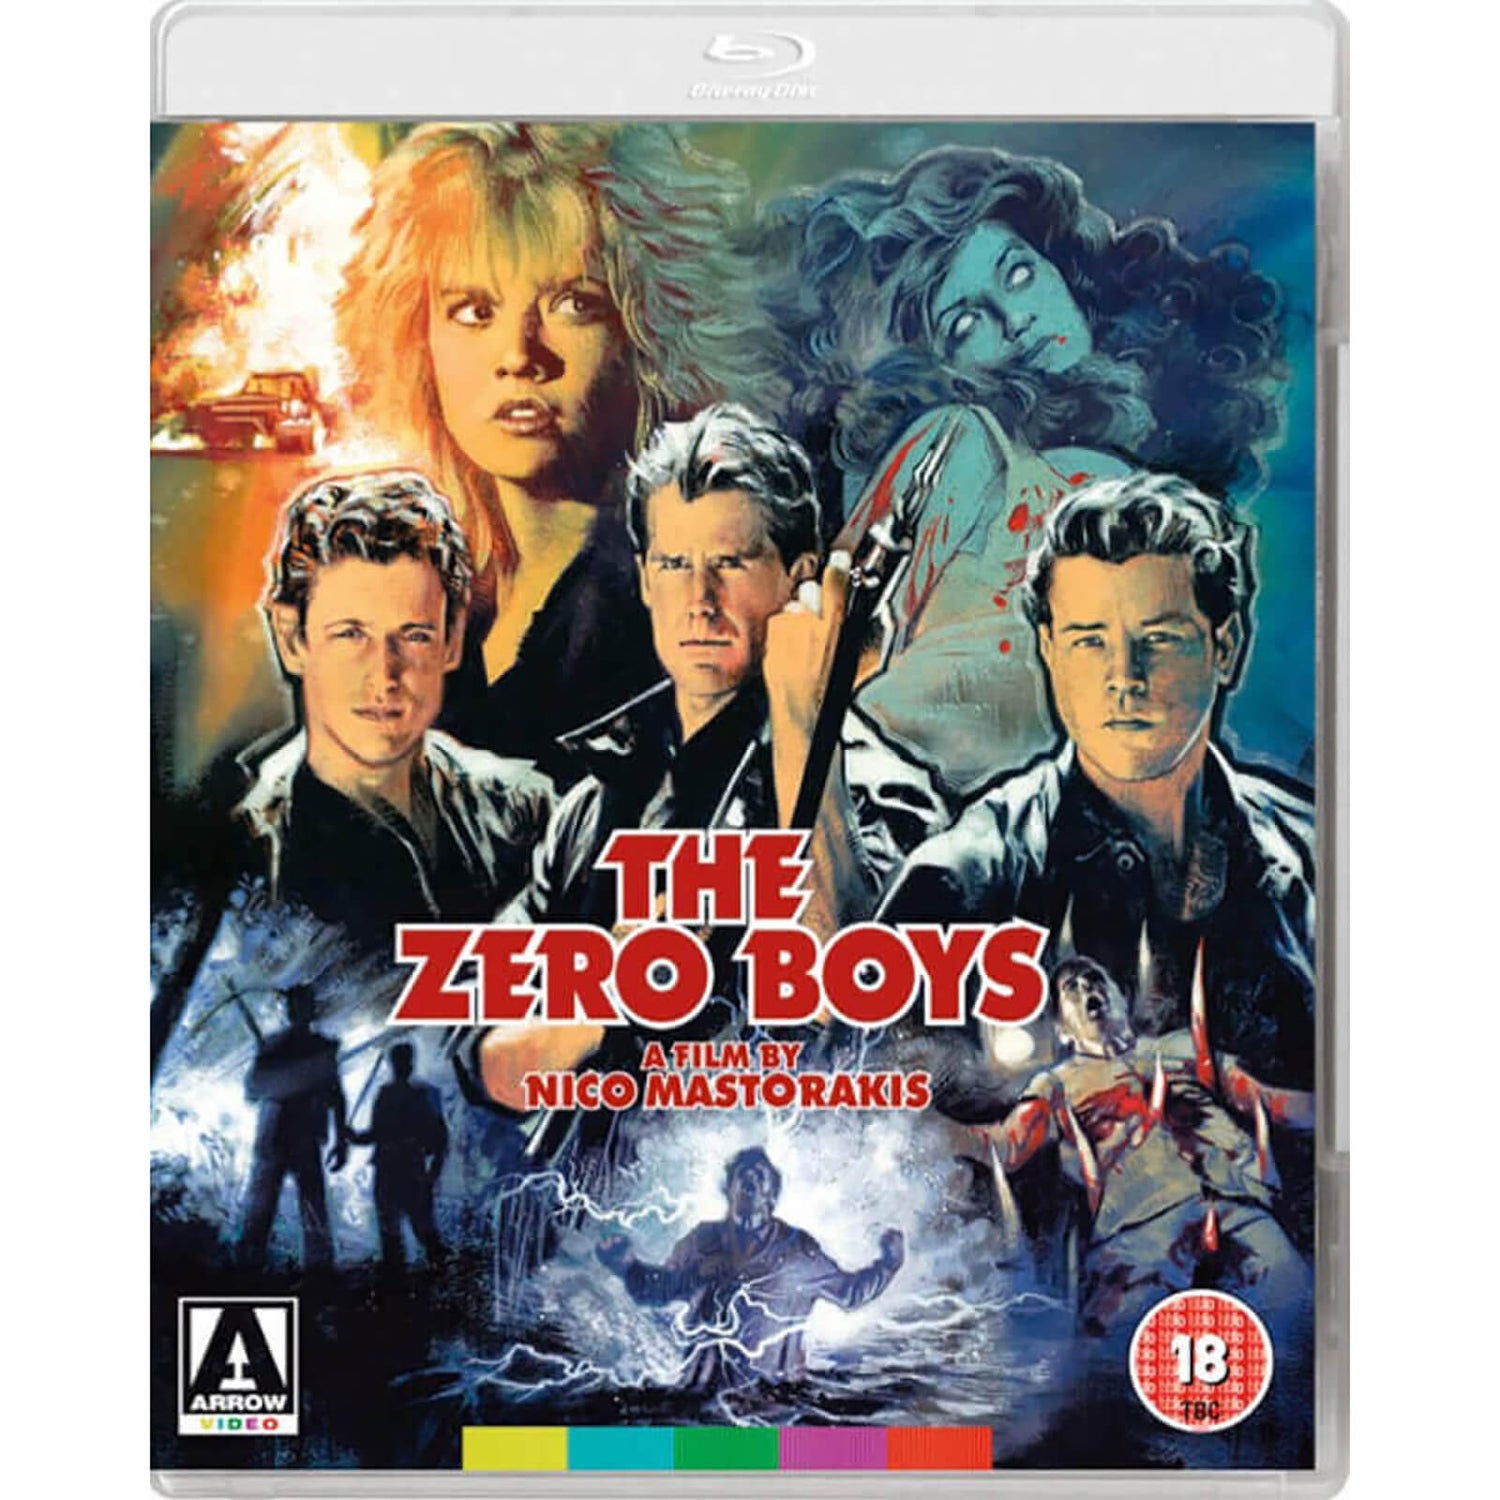 The Zero Boys Blu-ray+DVD